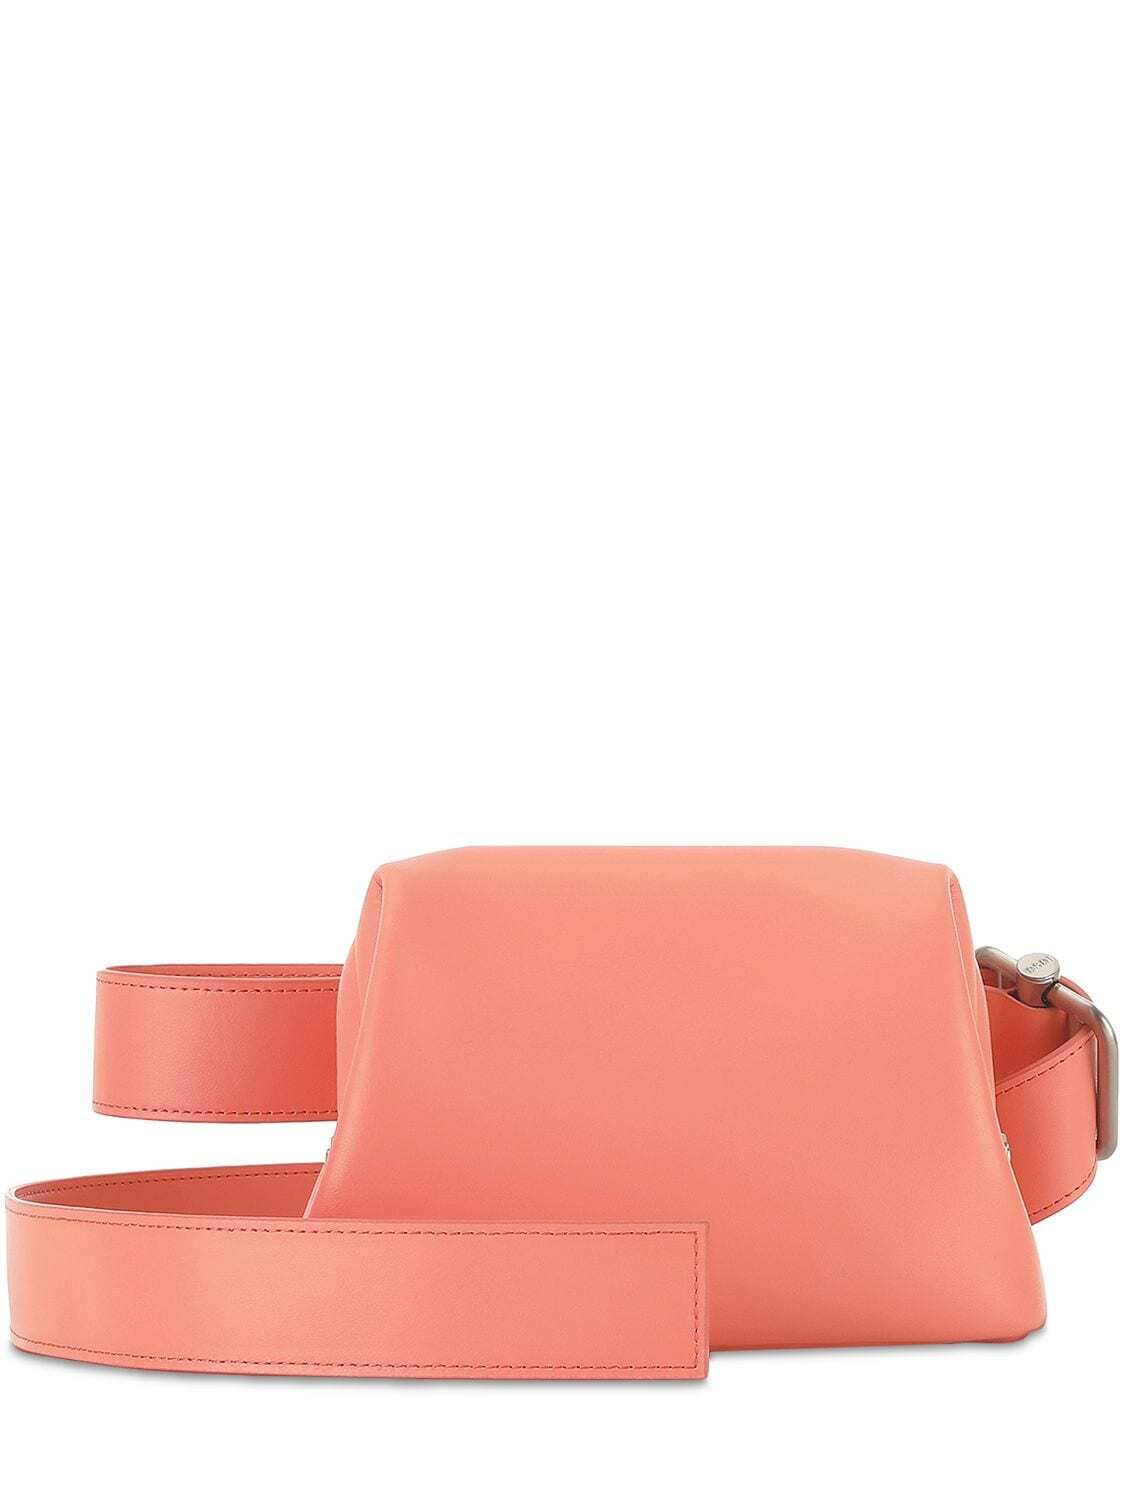 OSOI Pecan Brot Leather Shoulder Bag in pink